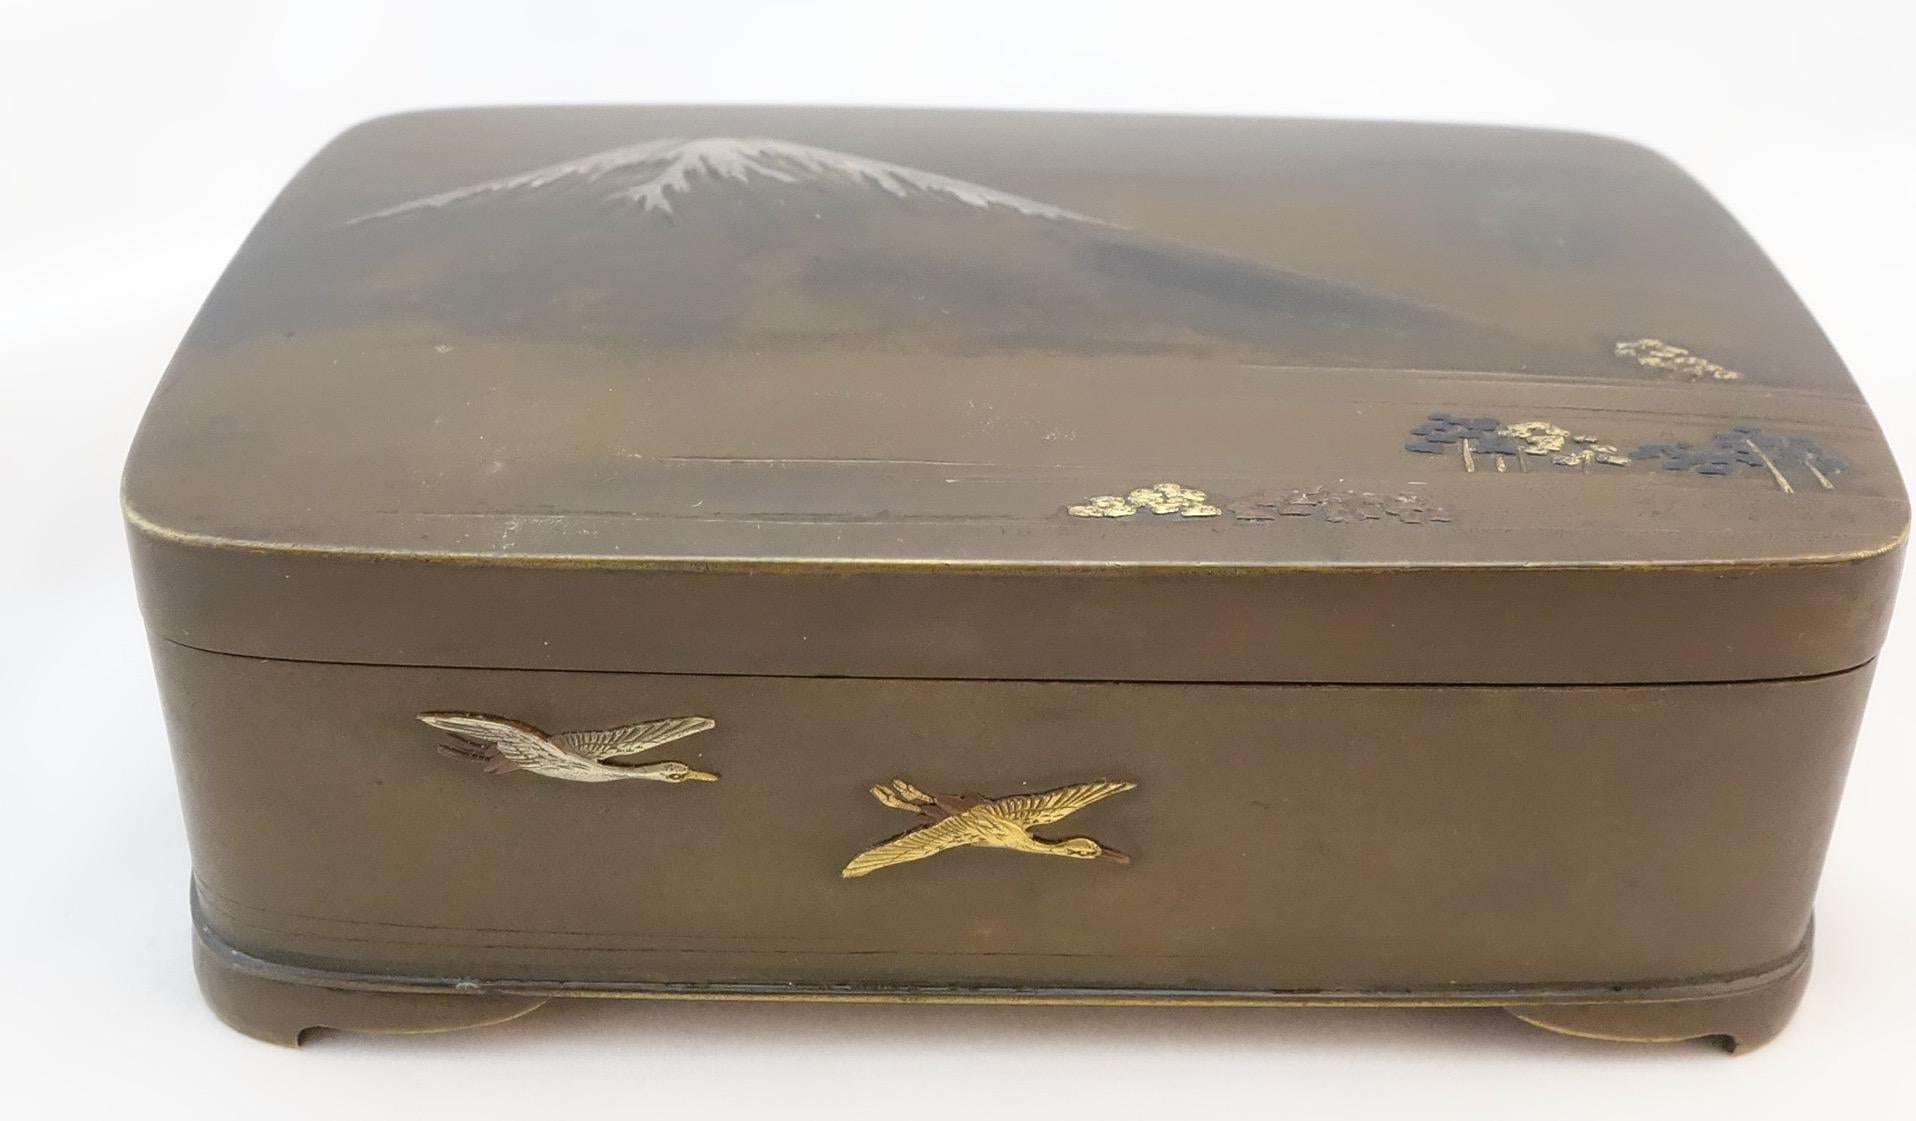 Appliqué Japanese Bronze and Mixed Metal Shakudo Covered Box Mount Fuji View Meiji Period